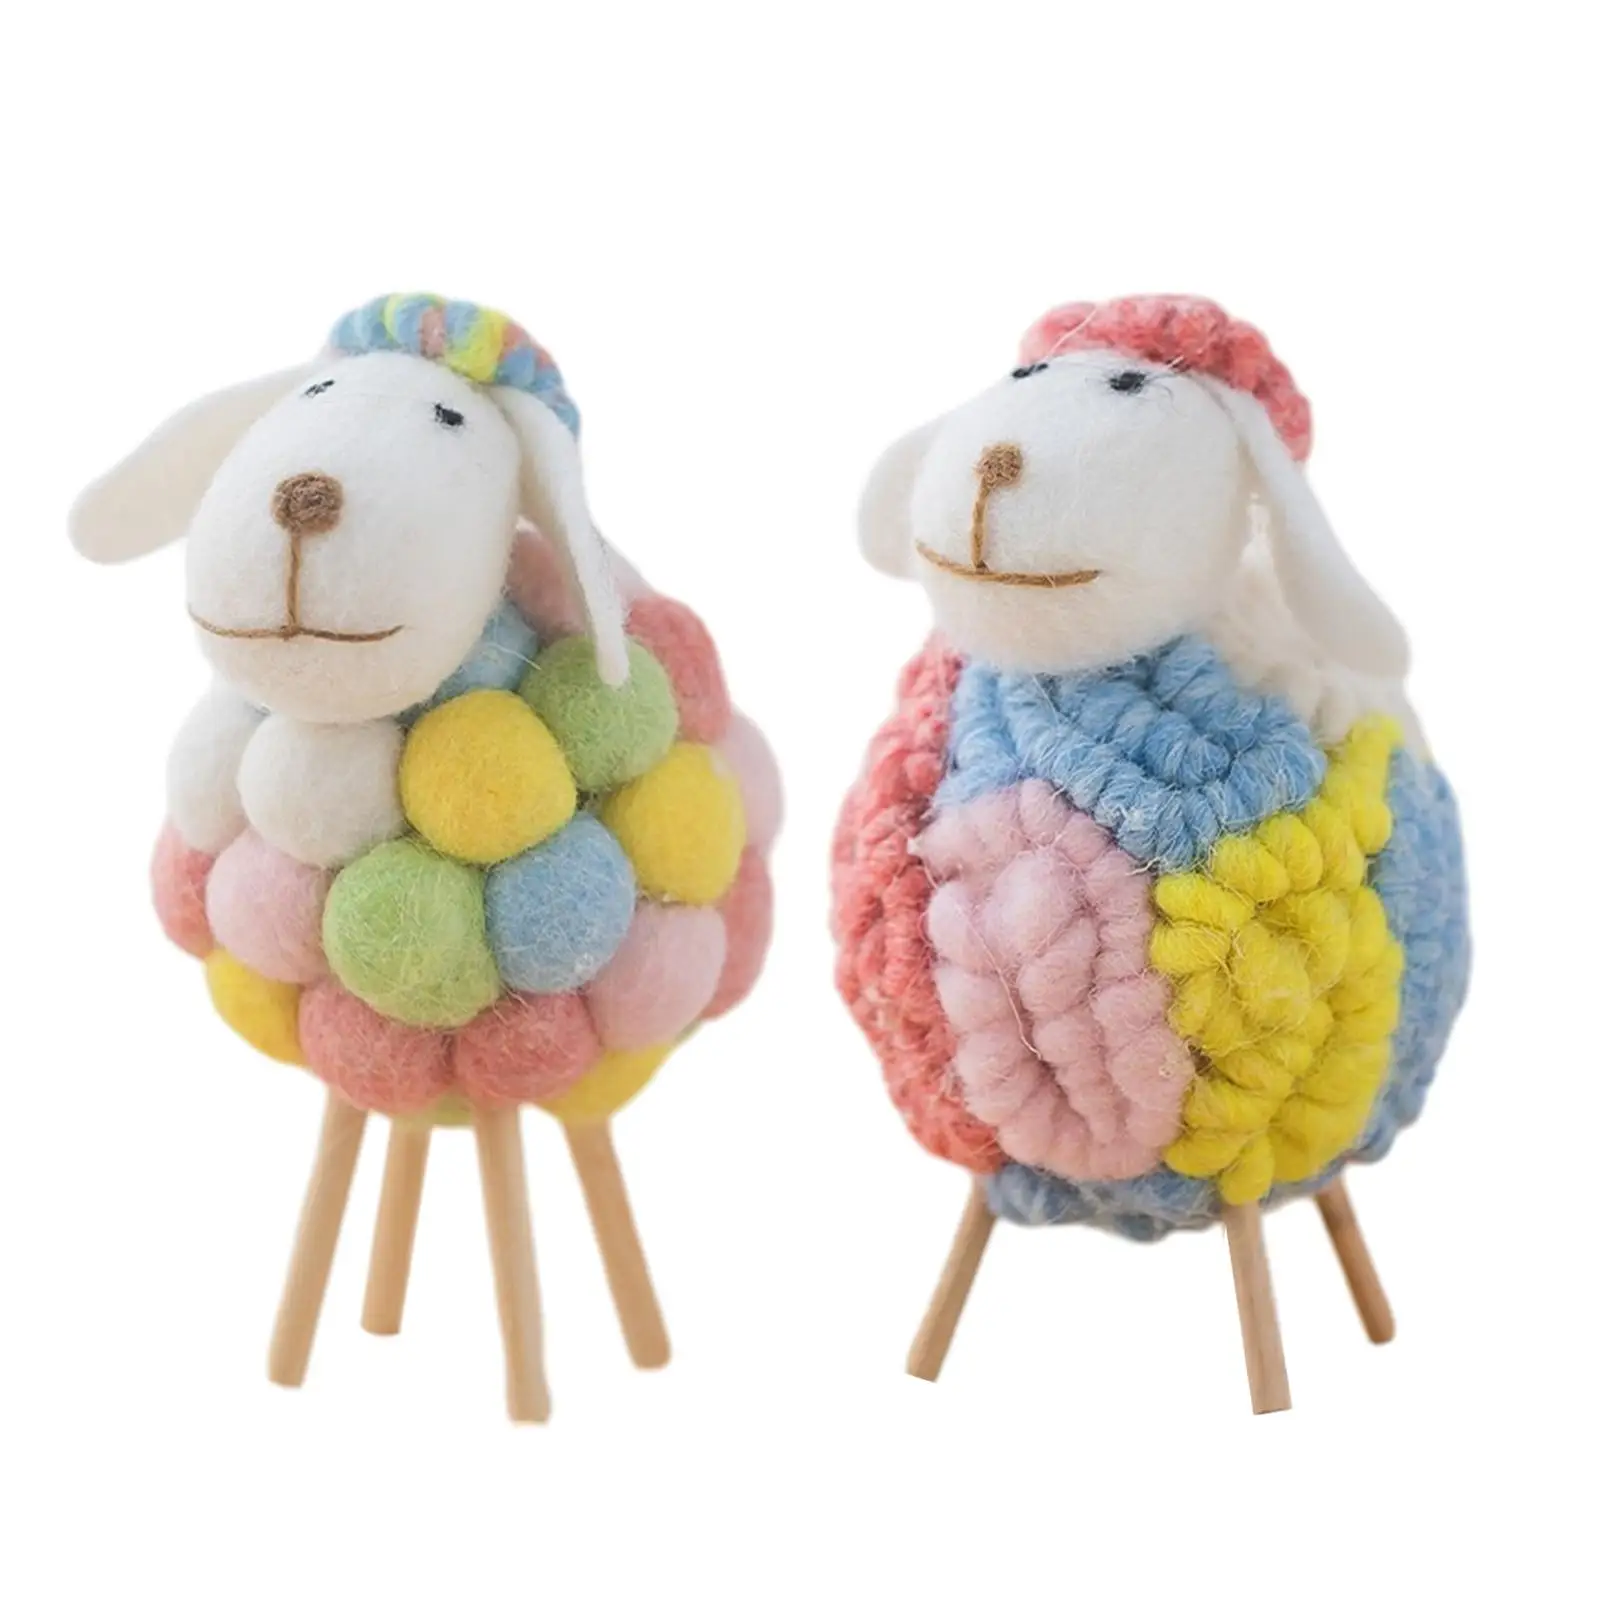 Felt Sheep Lamb Figurine Table Ornament 11x11x16cm for Room Decor Versatile